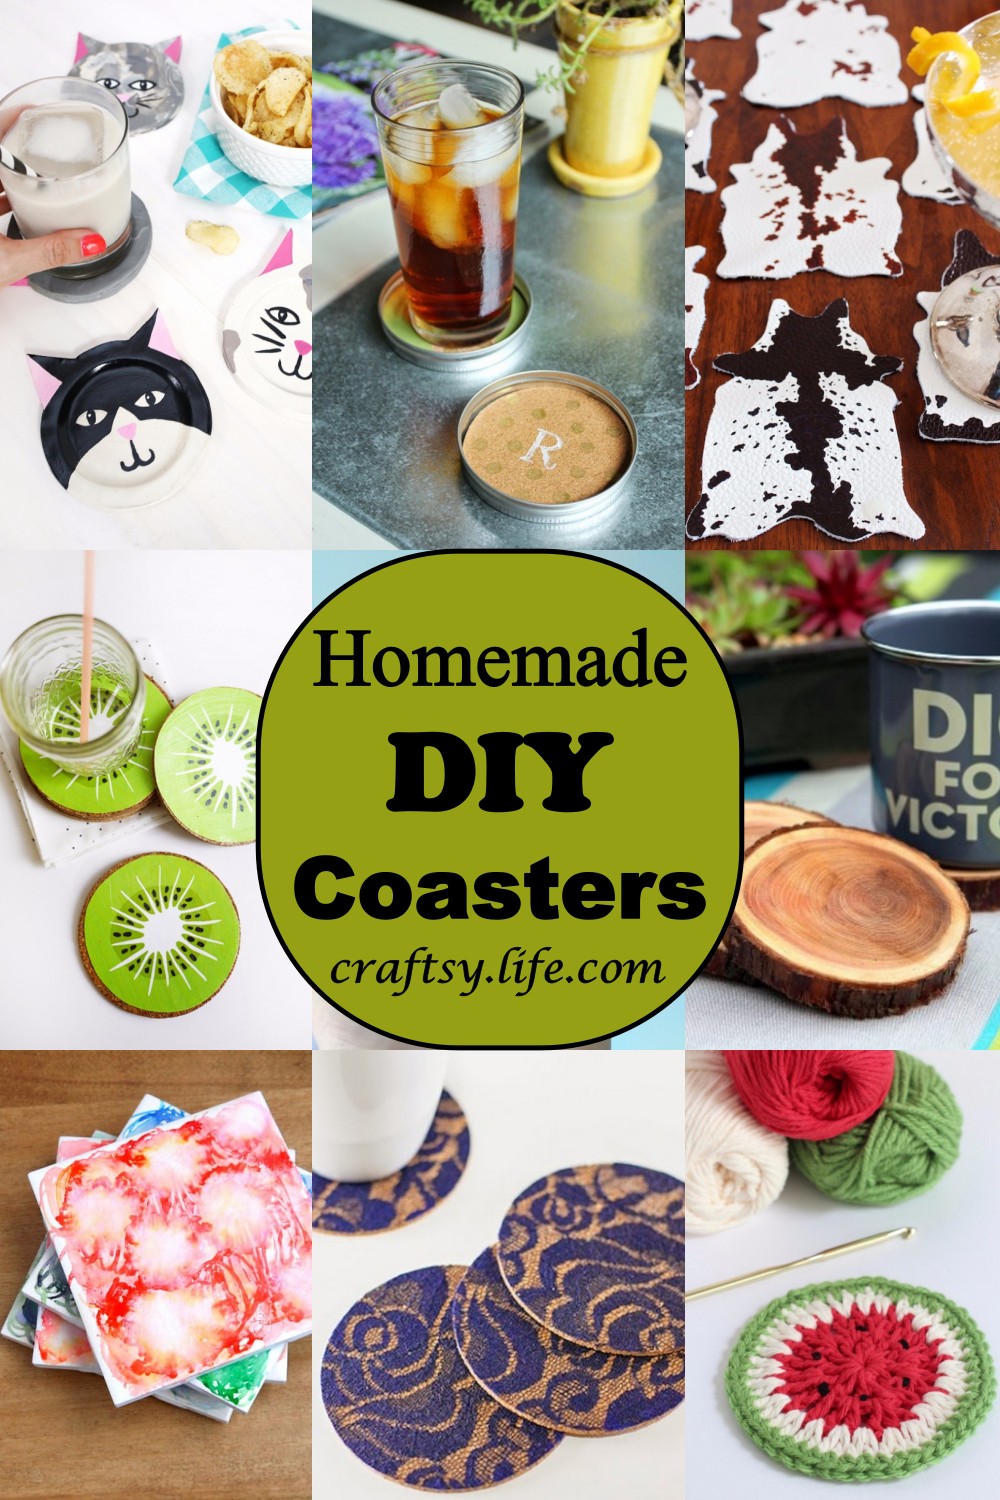 Homemade DIY Coasters